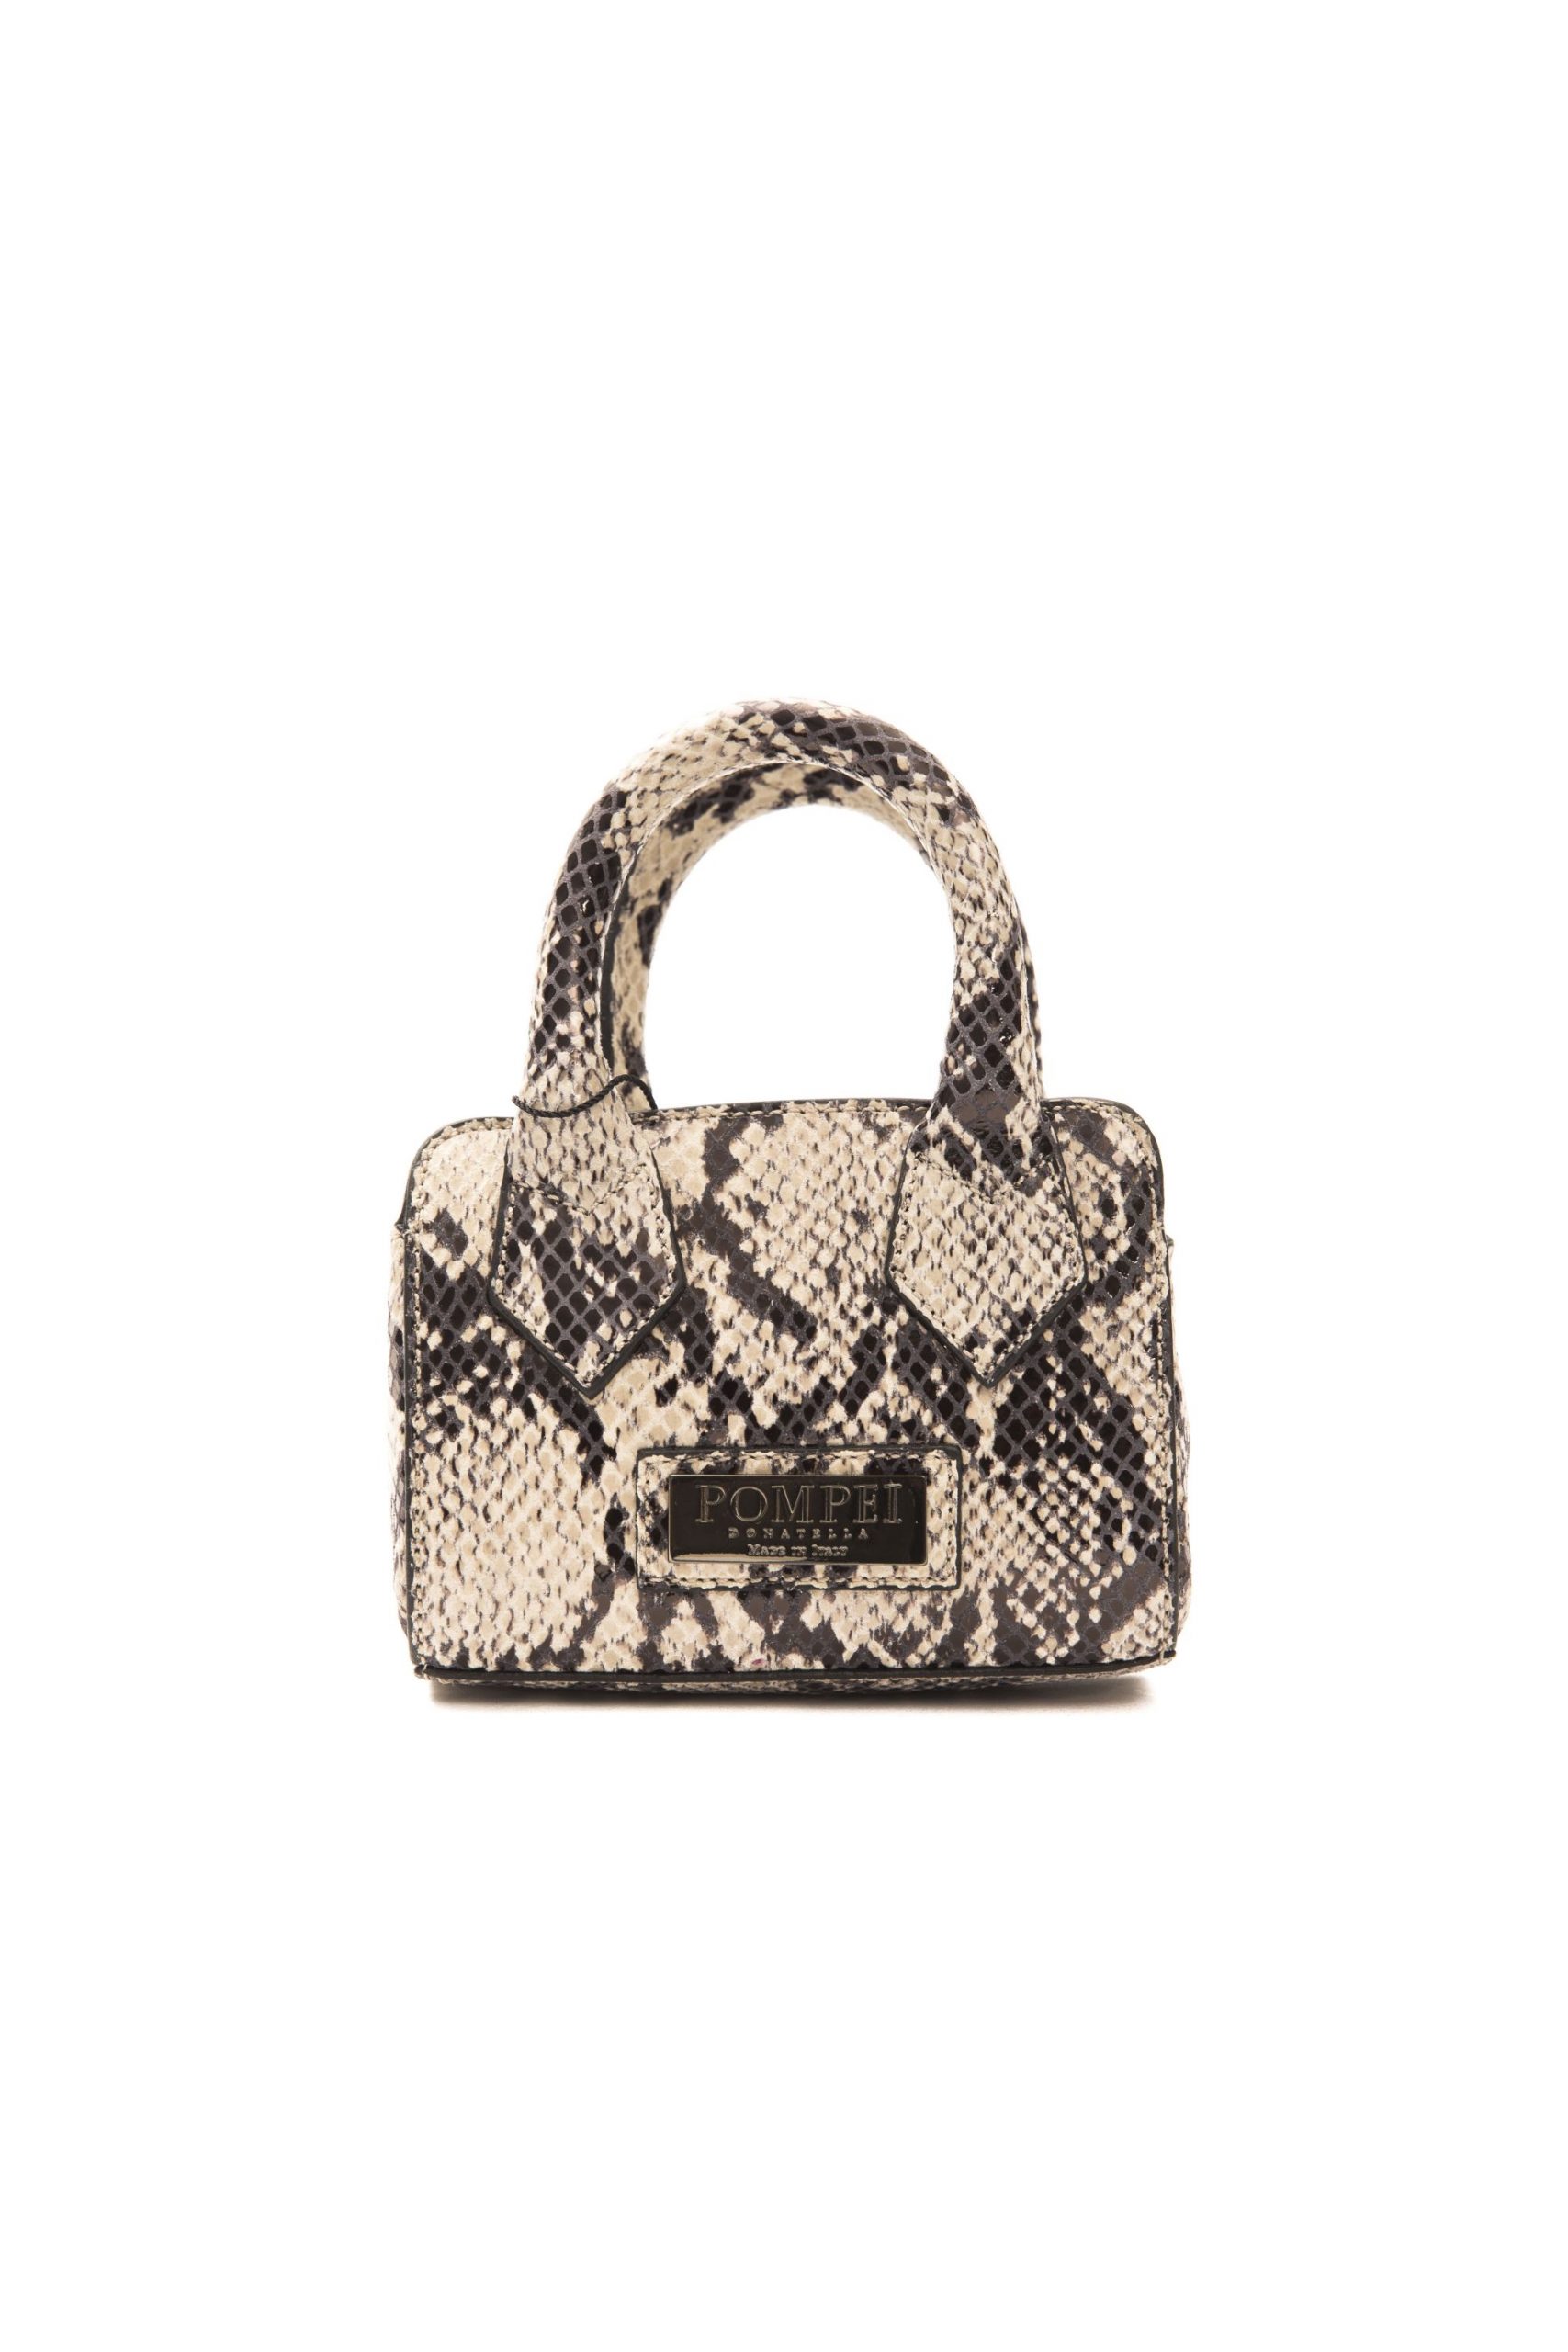 Pompei Donatella Women's Handbag Grey PO667794